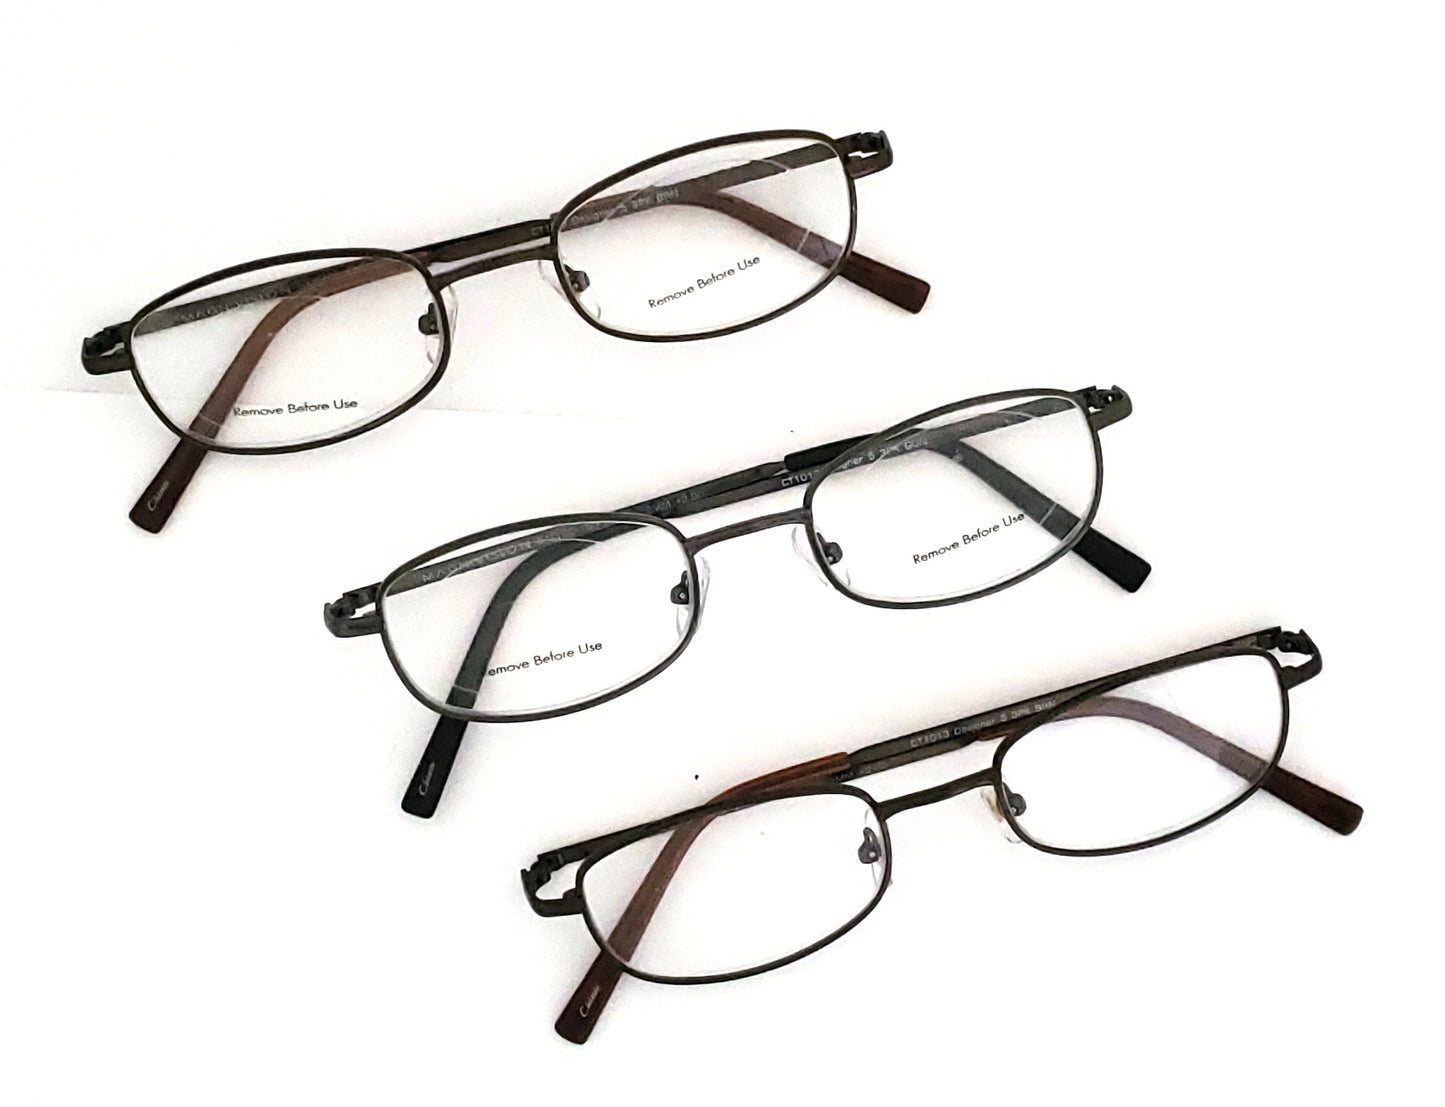 Foster Grant Reading Glasses DESIGNER 3 Pack - General Wholesale Direct